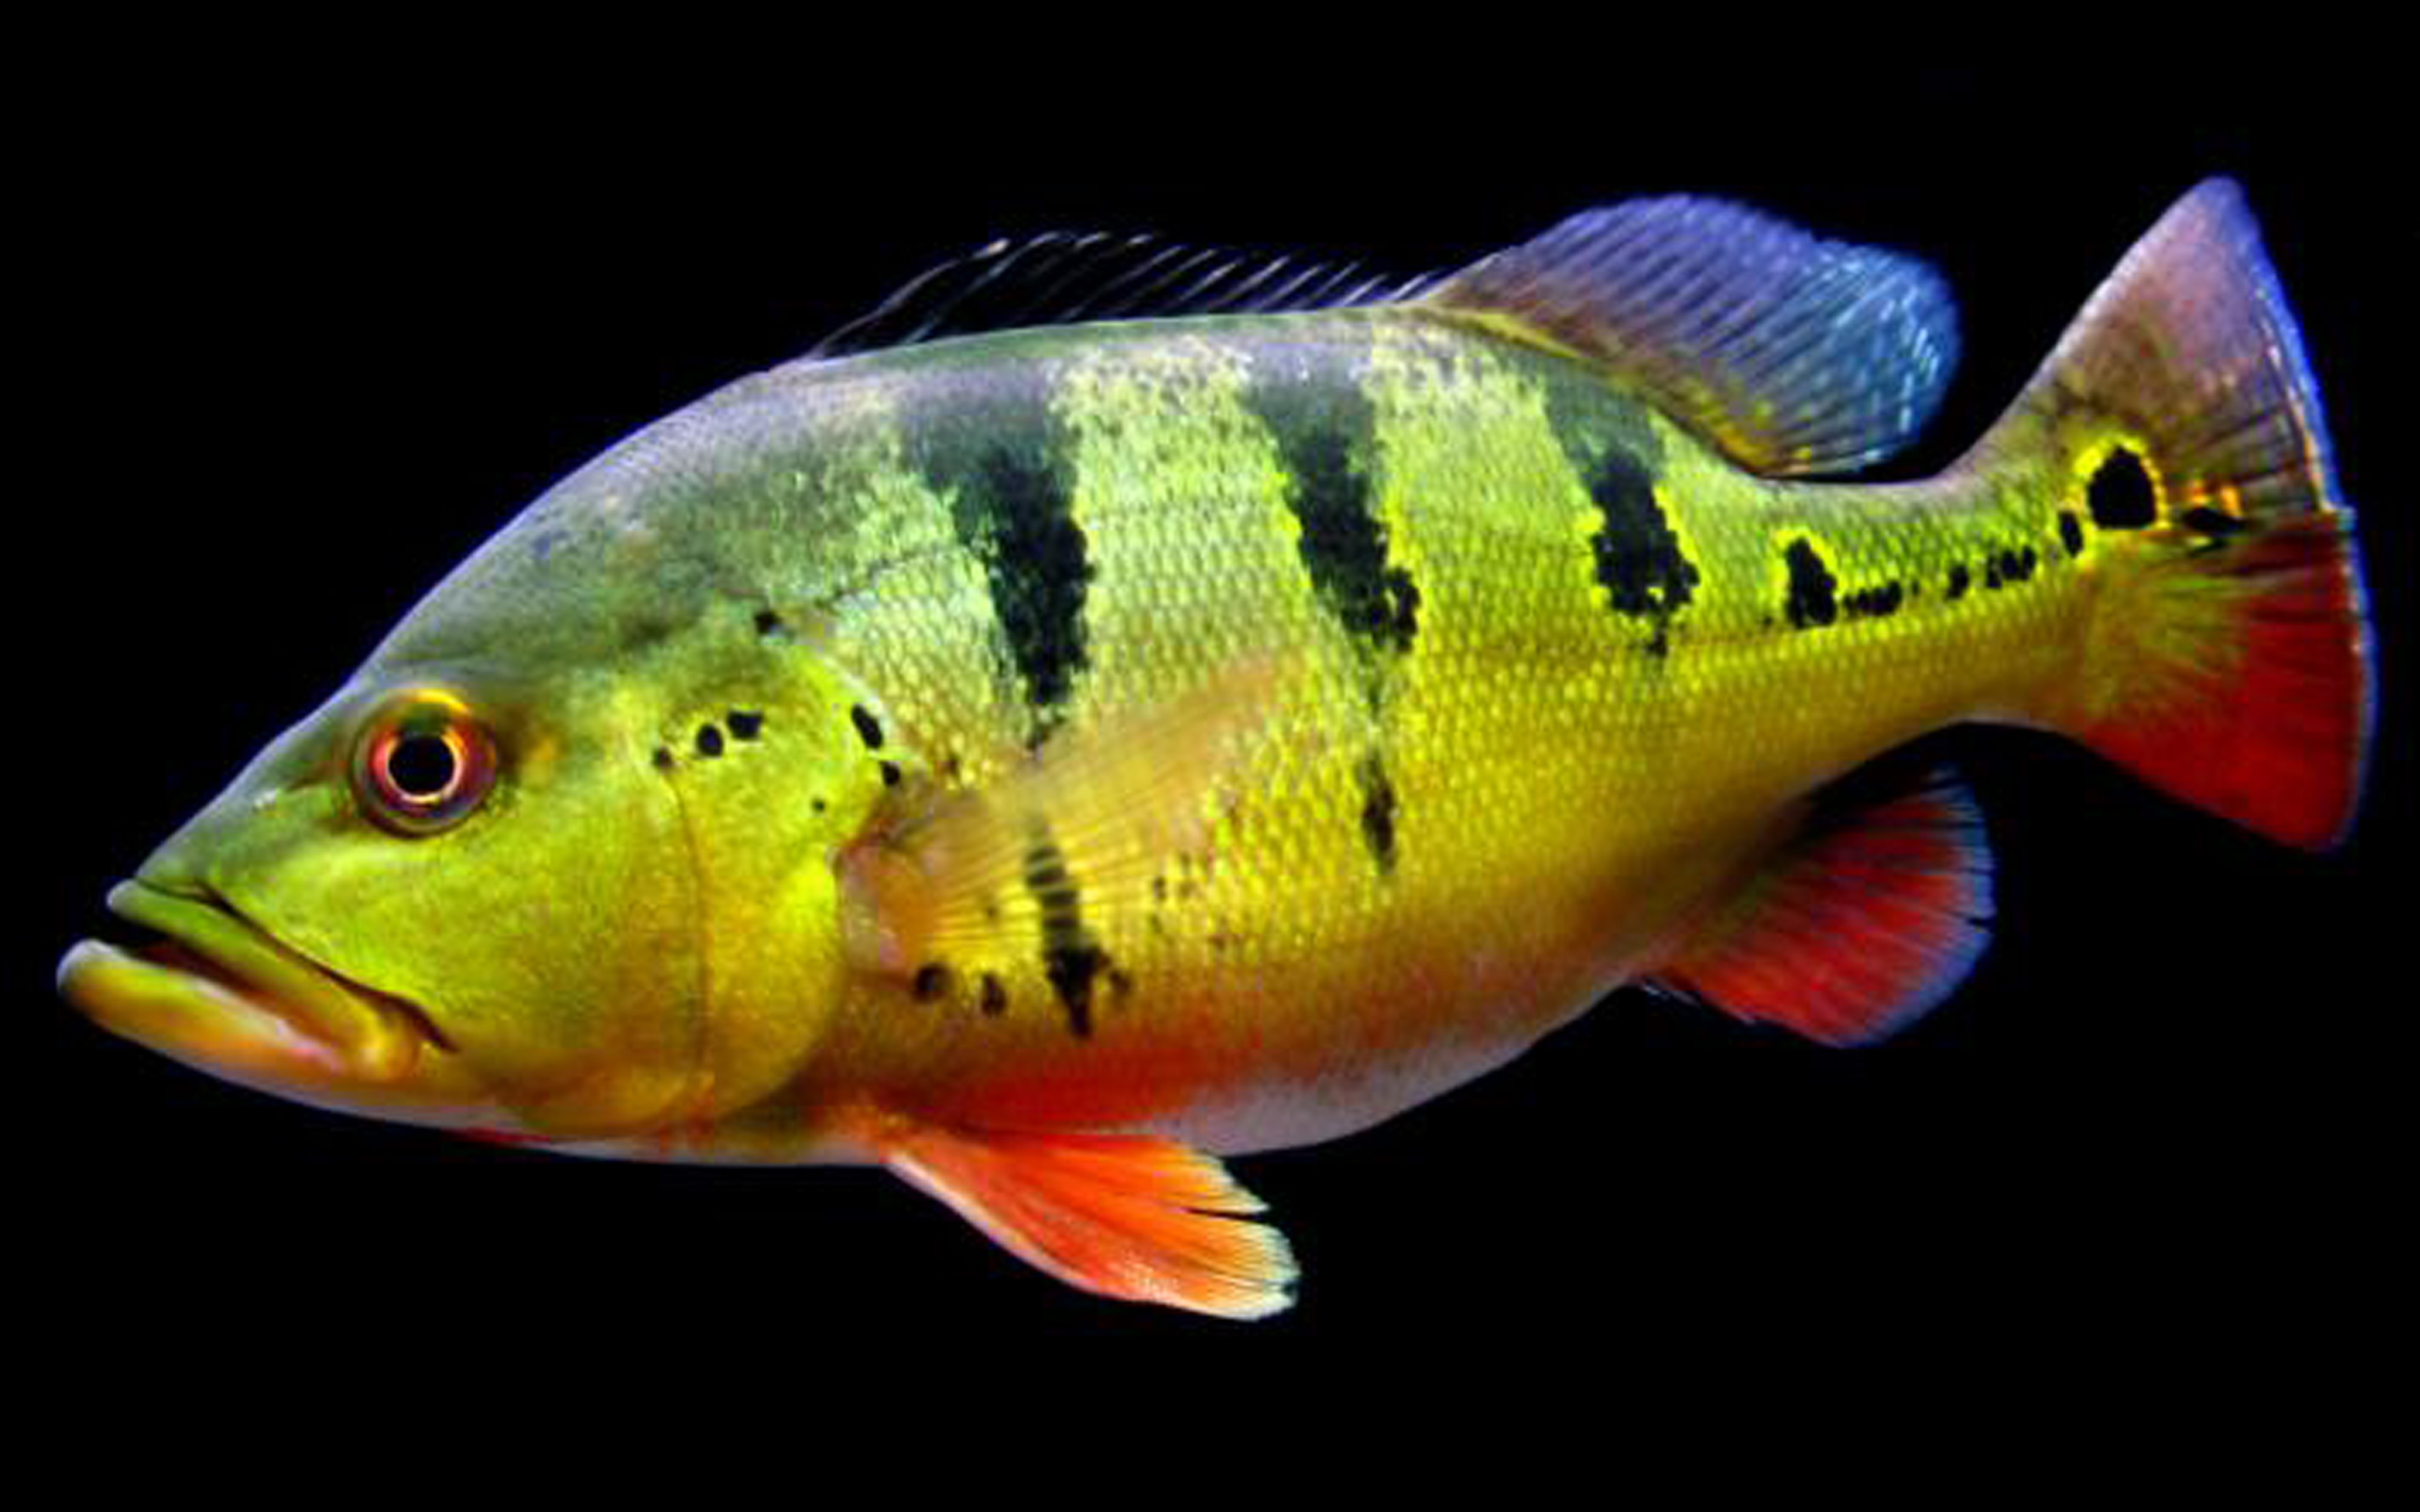 Cichla Ocellaris Male Fish Wallpaper Hd : Wallpapers13.com